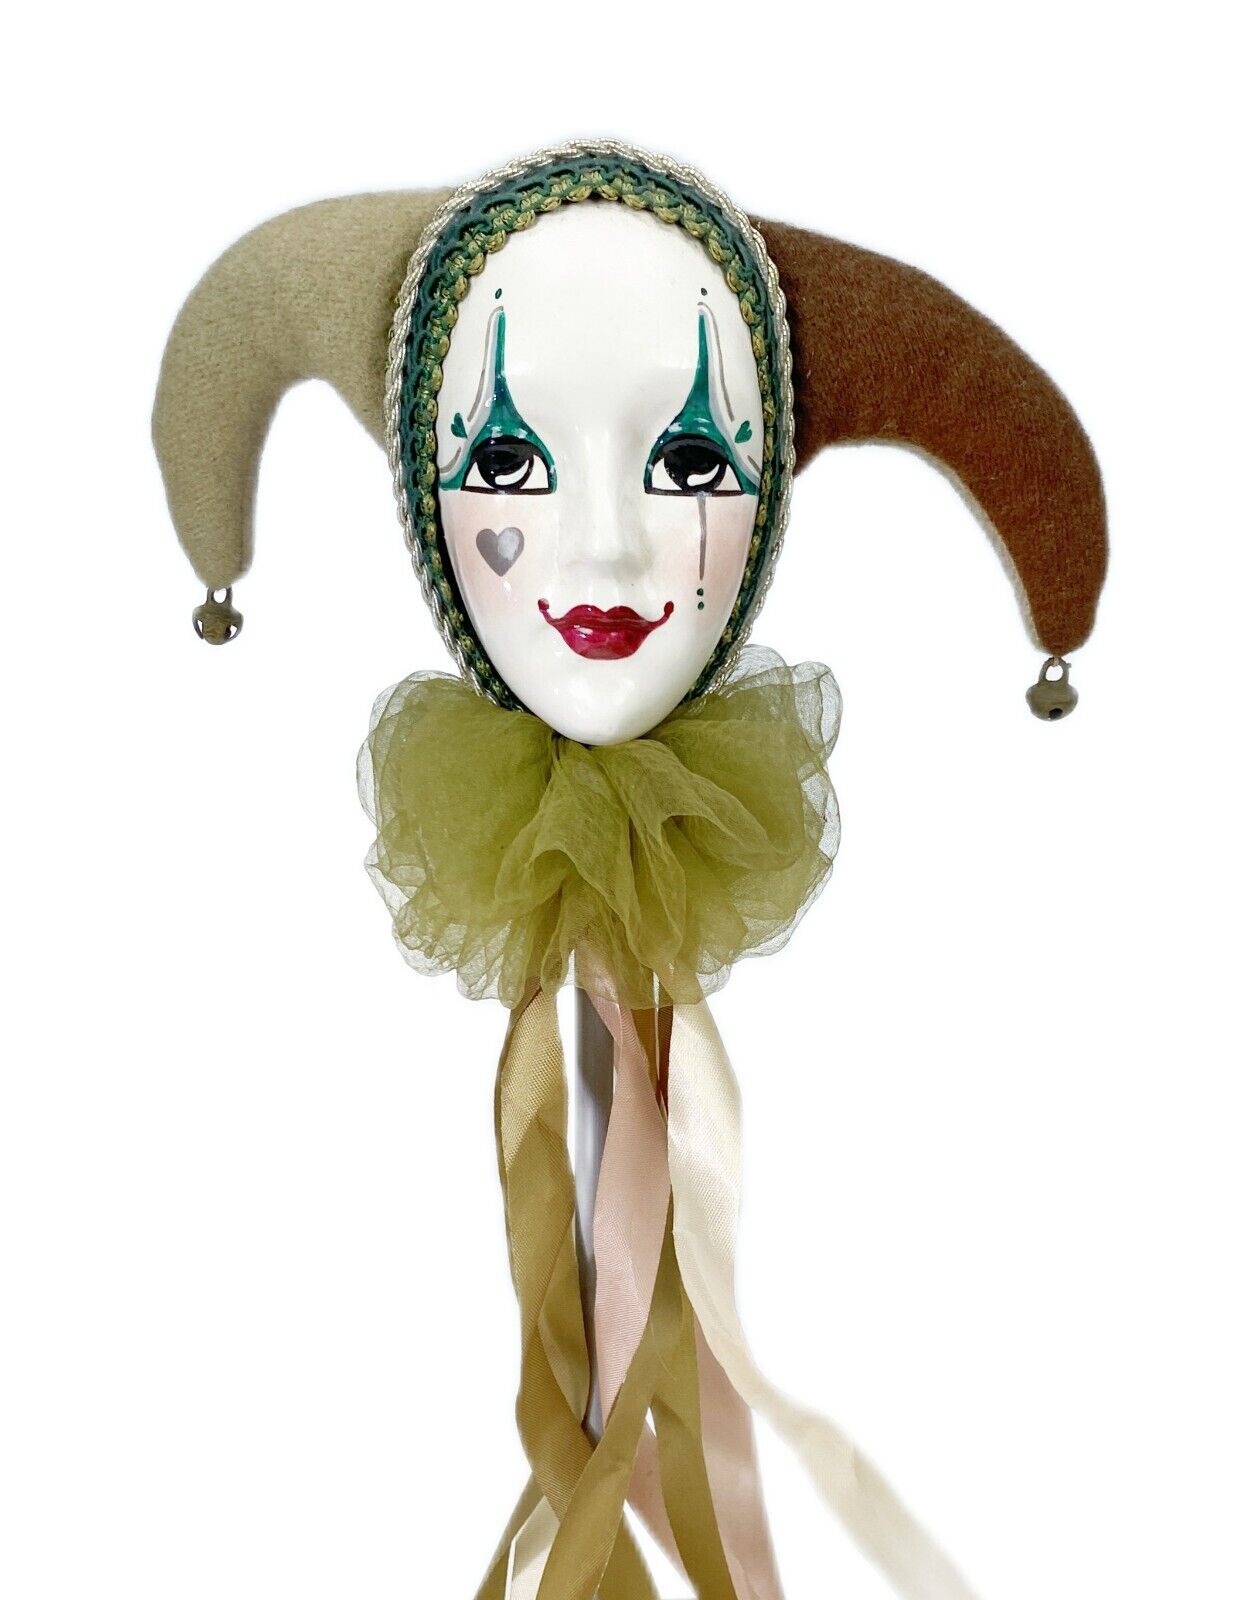 15” Stick Jester Harlequin Joker Renaissance Doll Art Plush Figurine Toy Ceramic